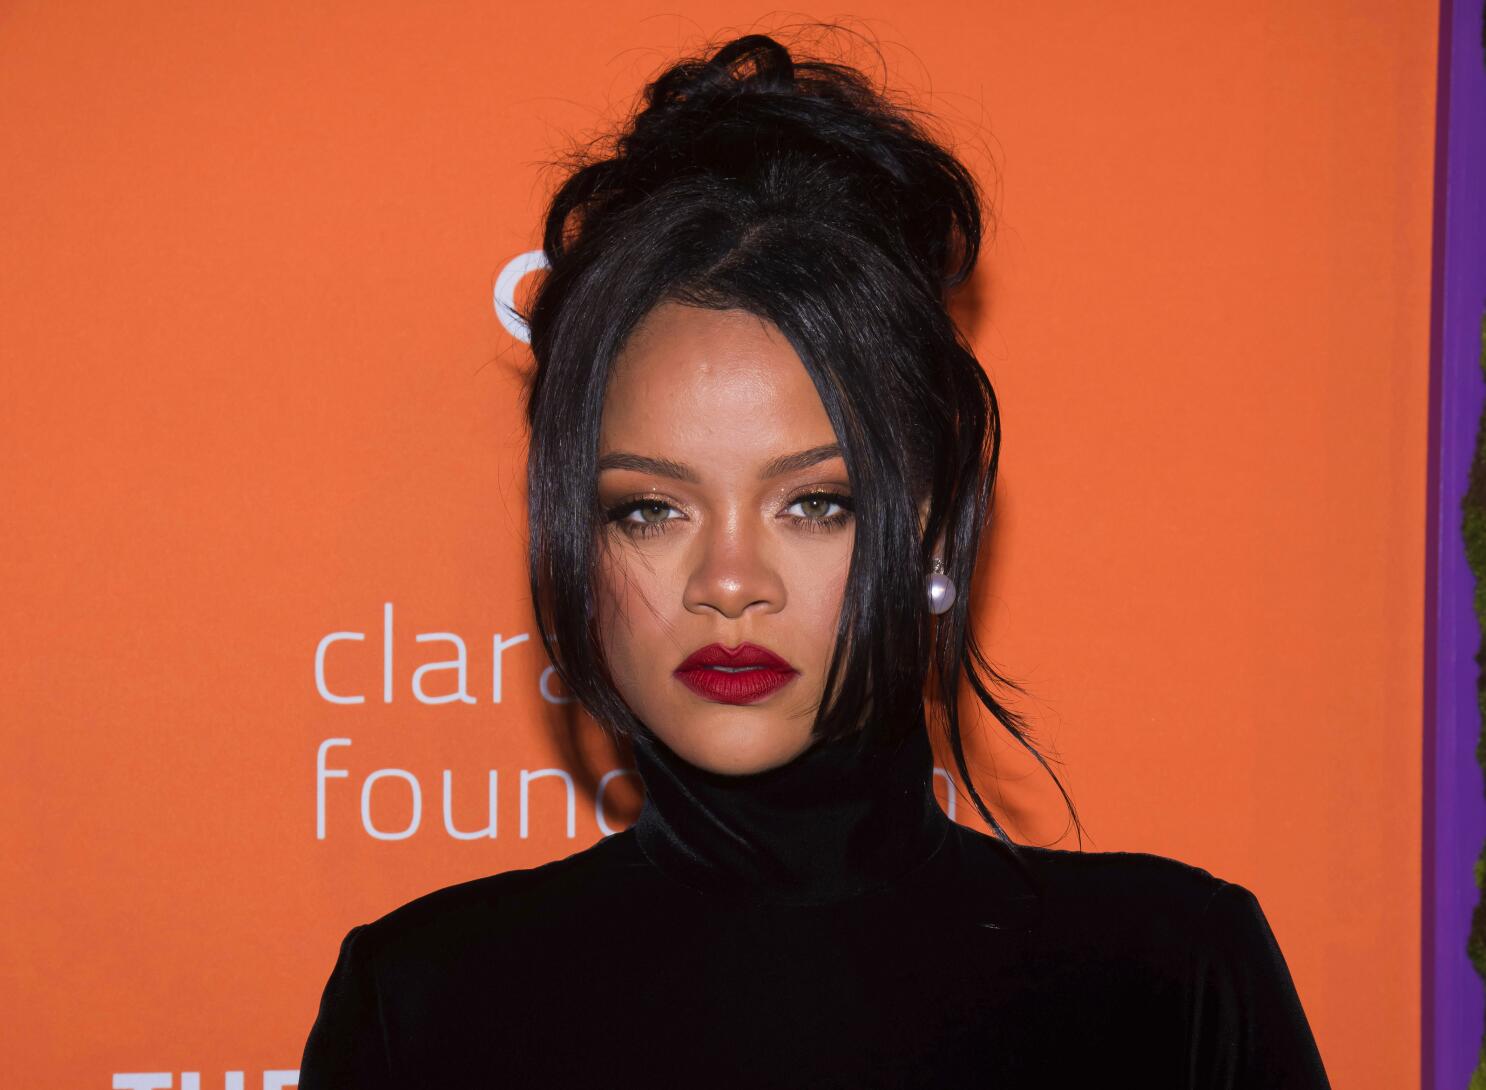 Rihanna's Savage x Fenty Lingerie Brand Expanding